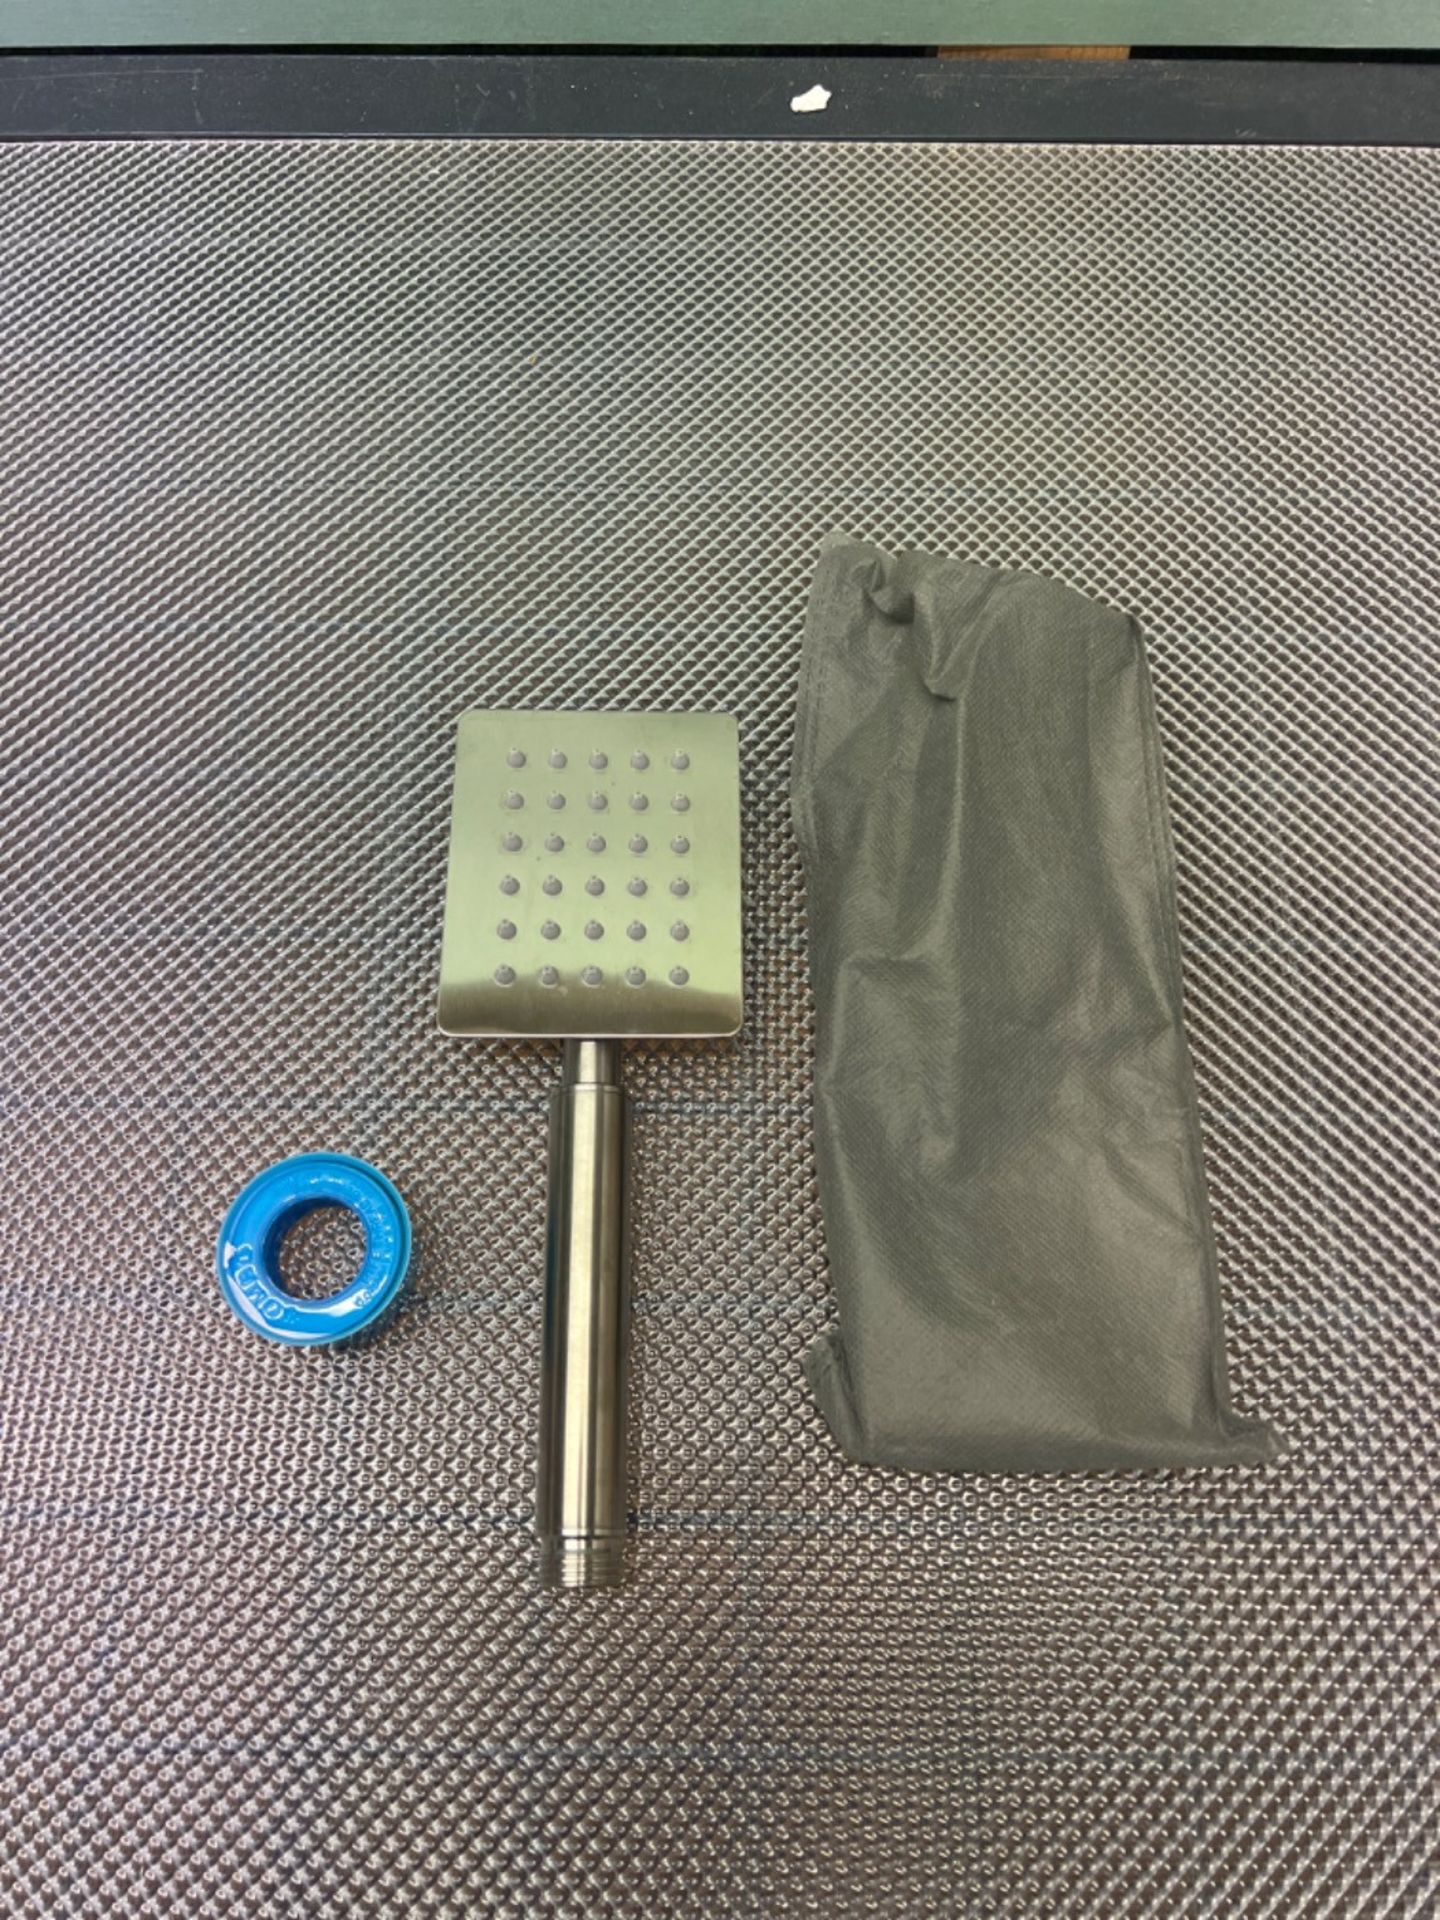 Yolococa Stainless Steel Handheld Shower Head Spray Face Ultra-Thin High Pressure Water-Saving Nozz - Image 3 of 3